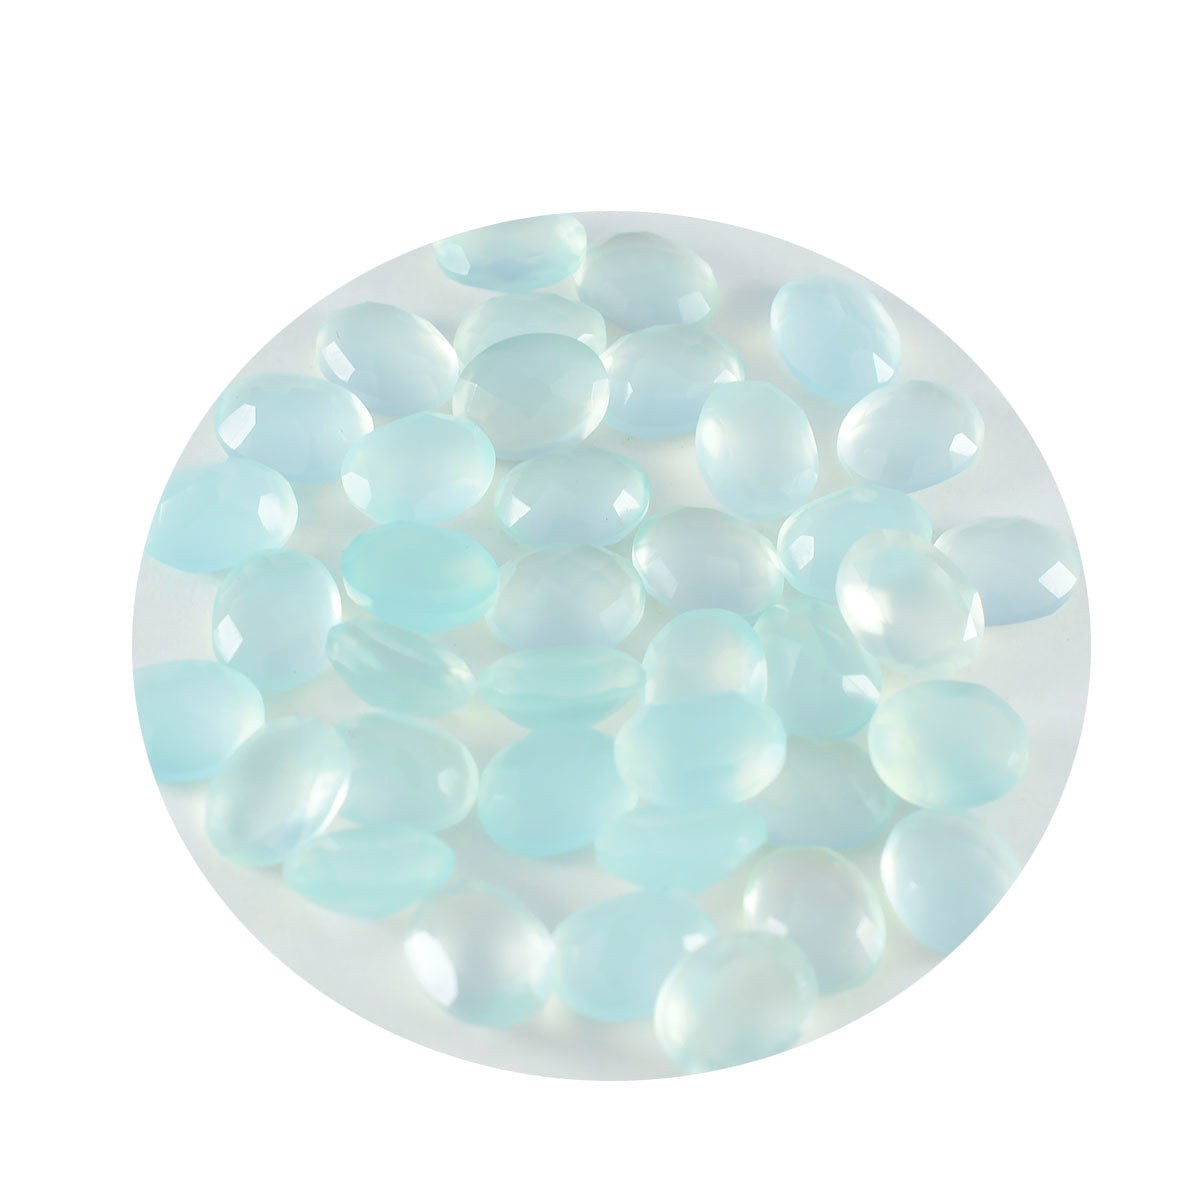 Riyogems 1PC Genuine Aqua Chalcedony Faceted 6x8 mm Oval Shape good-looking Quality Gems